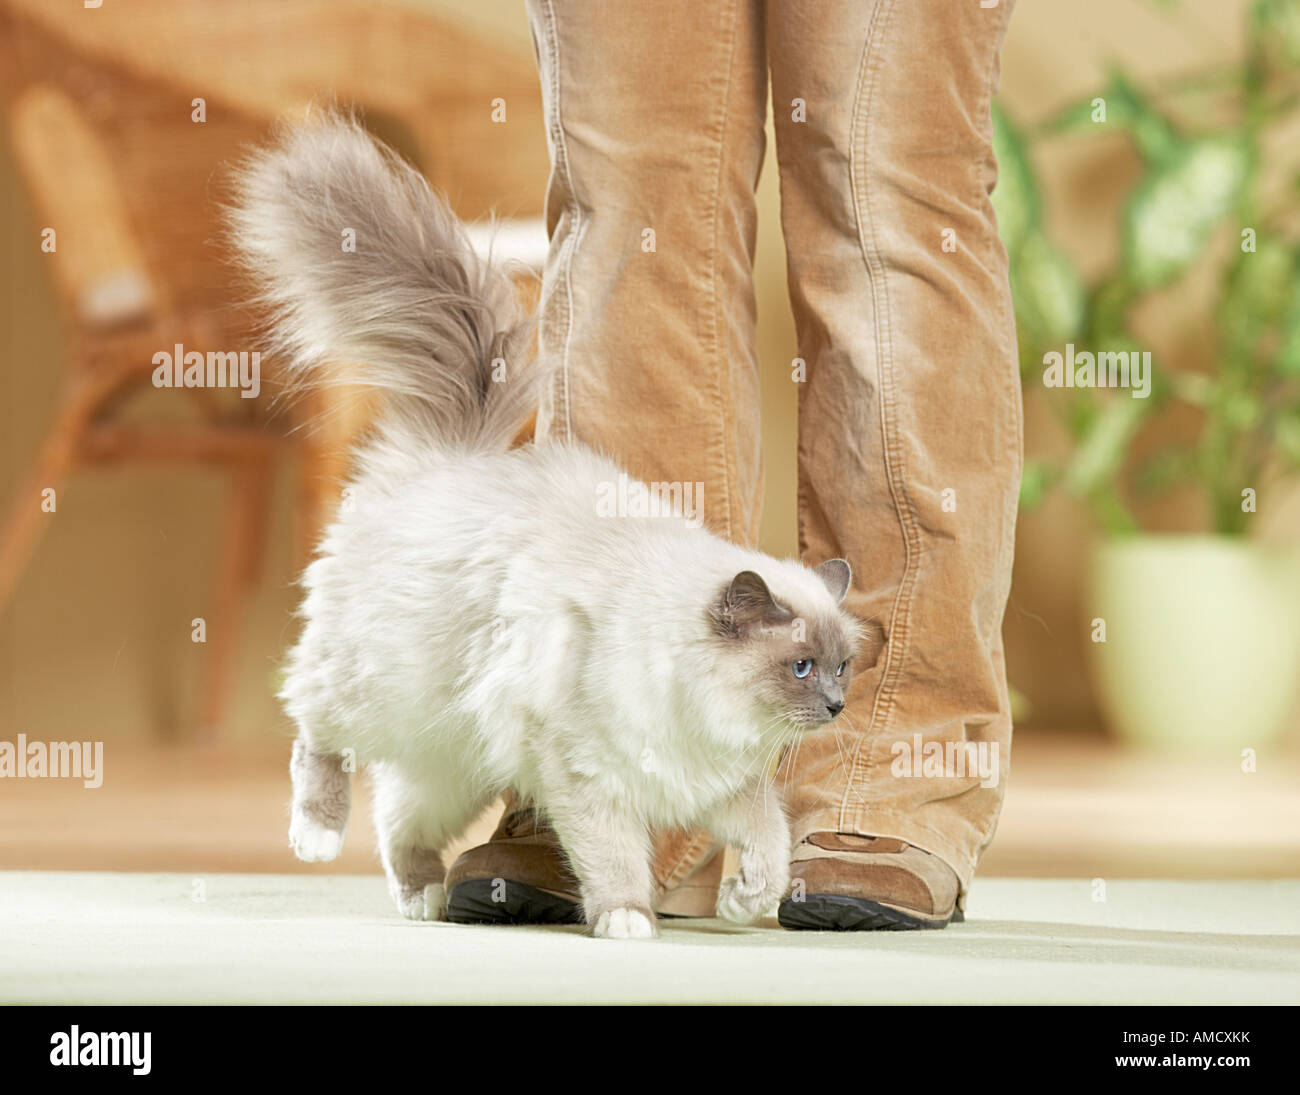 behaviour : Sacred cat of Burma - rubs against legs Stock Photo